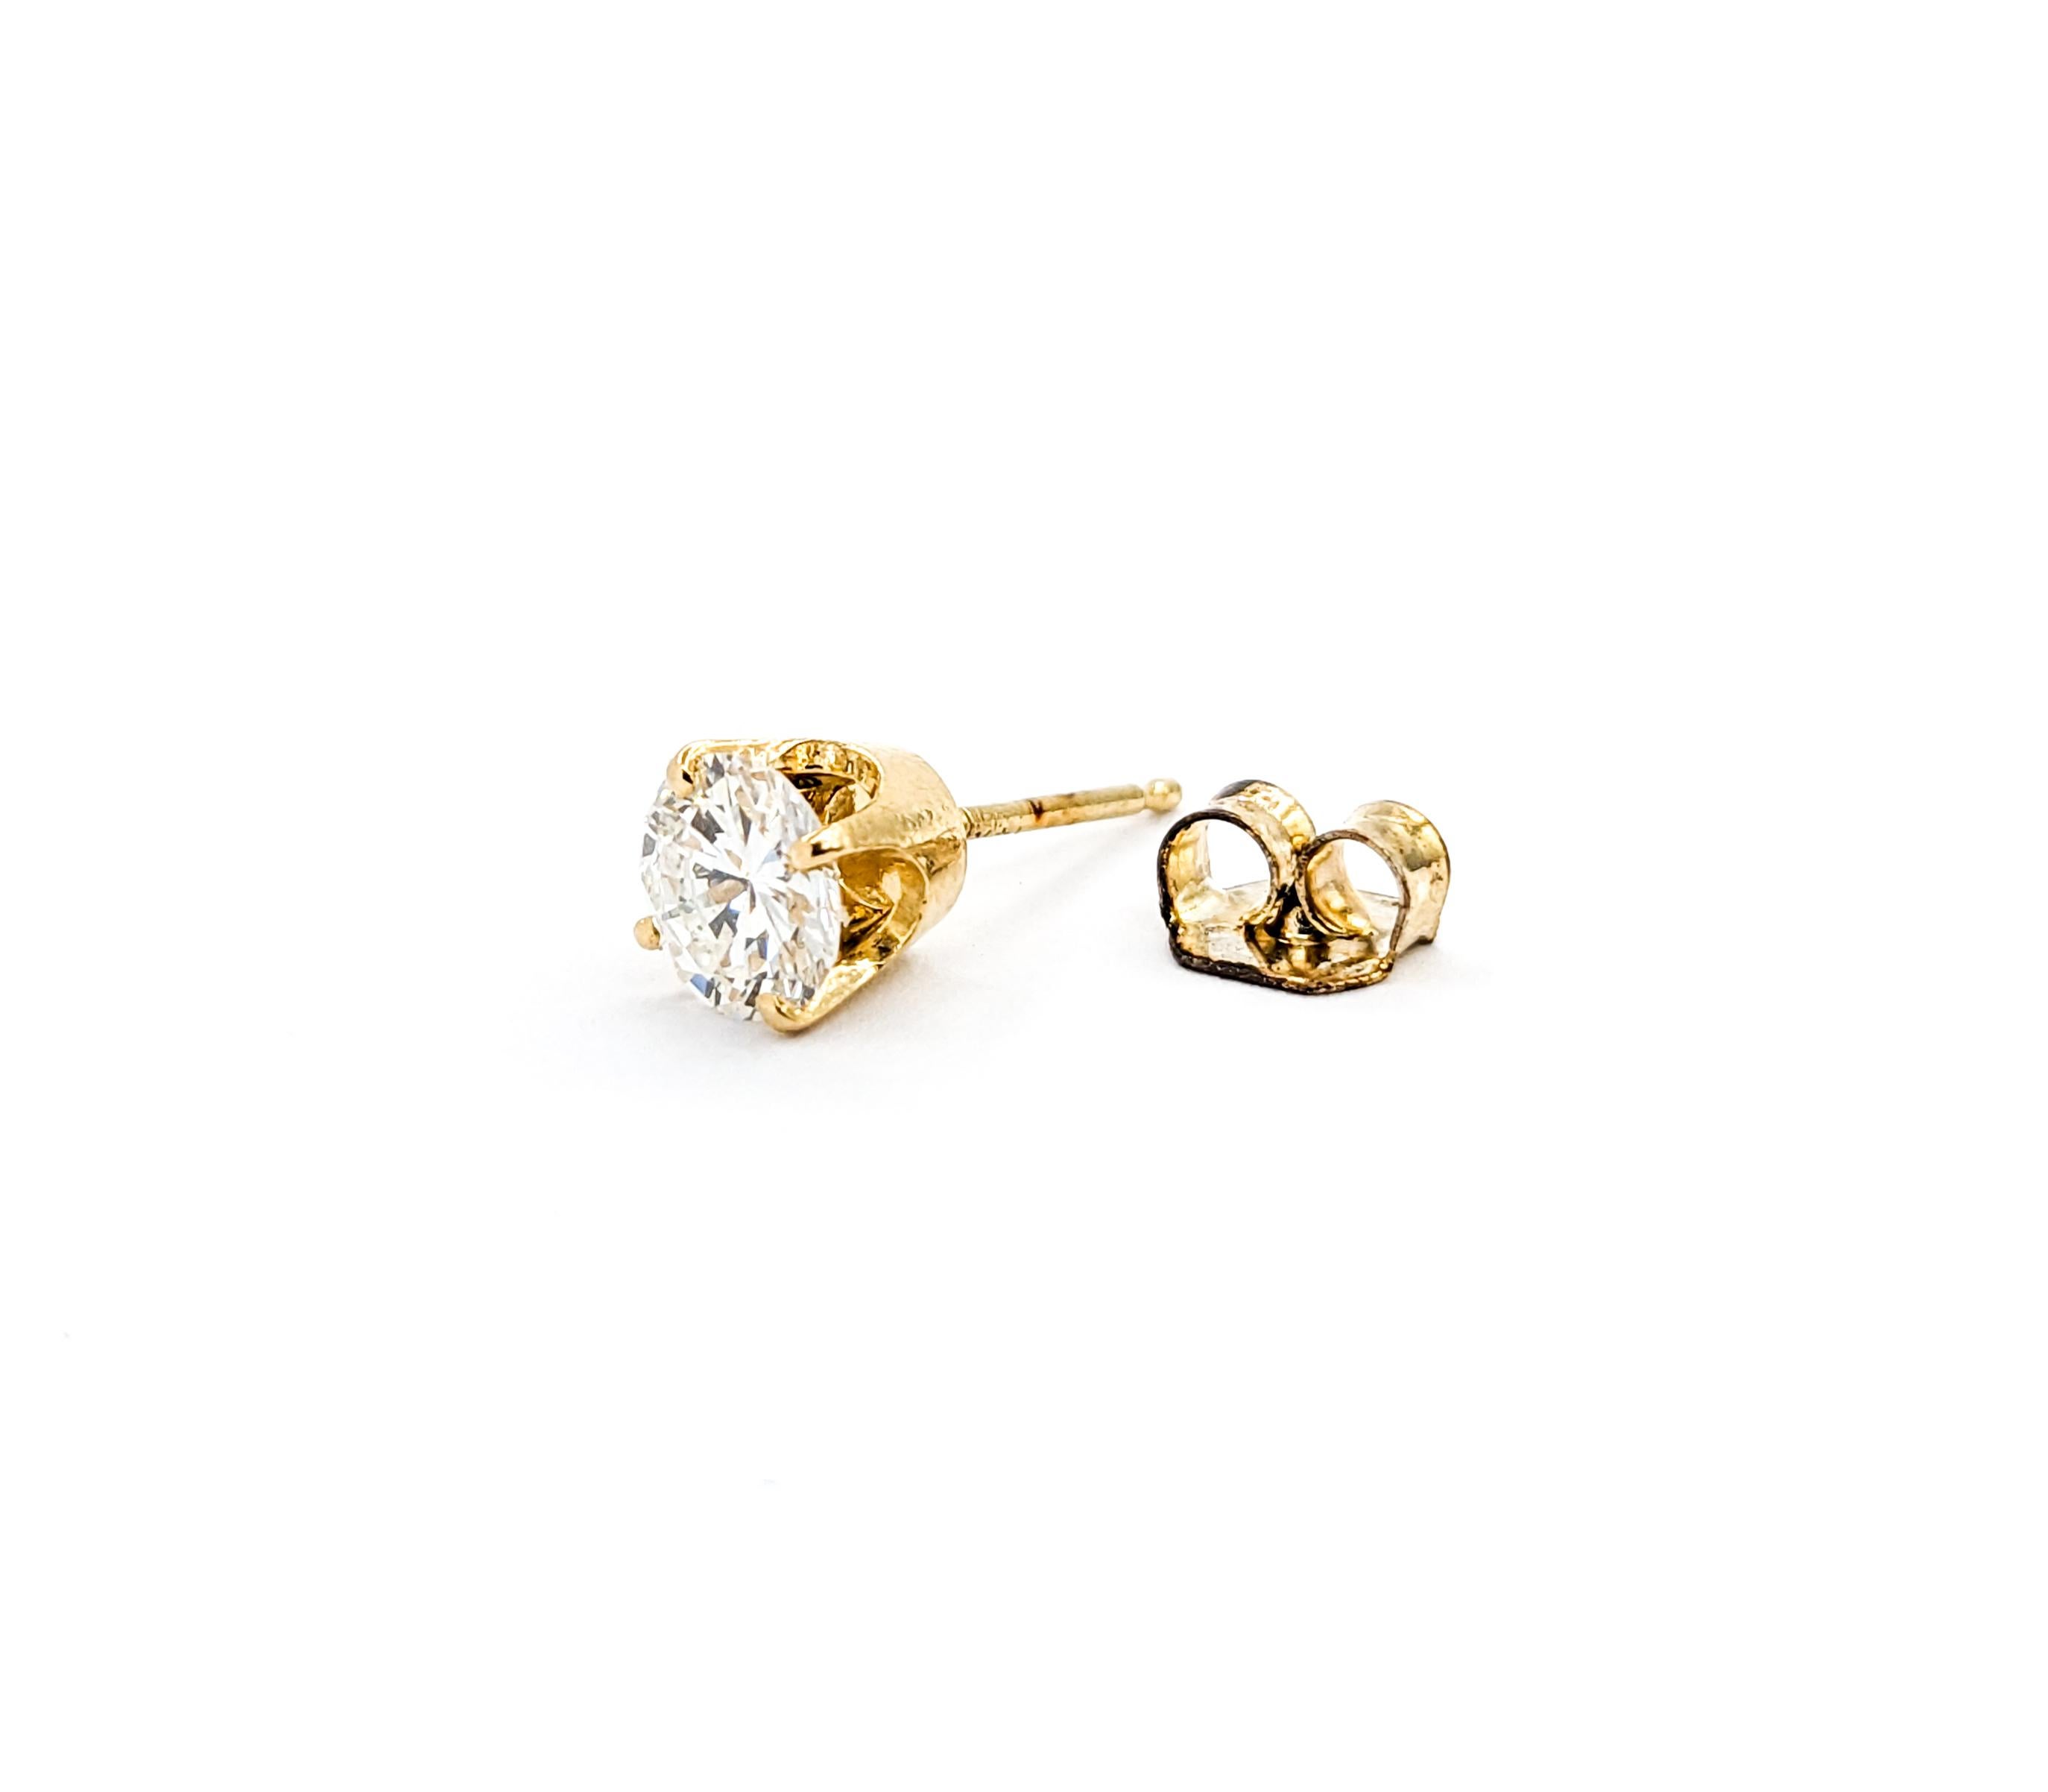 1ctw Diamond Stud Earrings In Yellow Gold For Sale 2